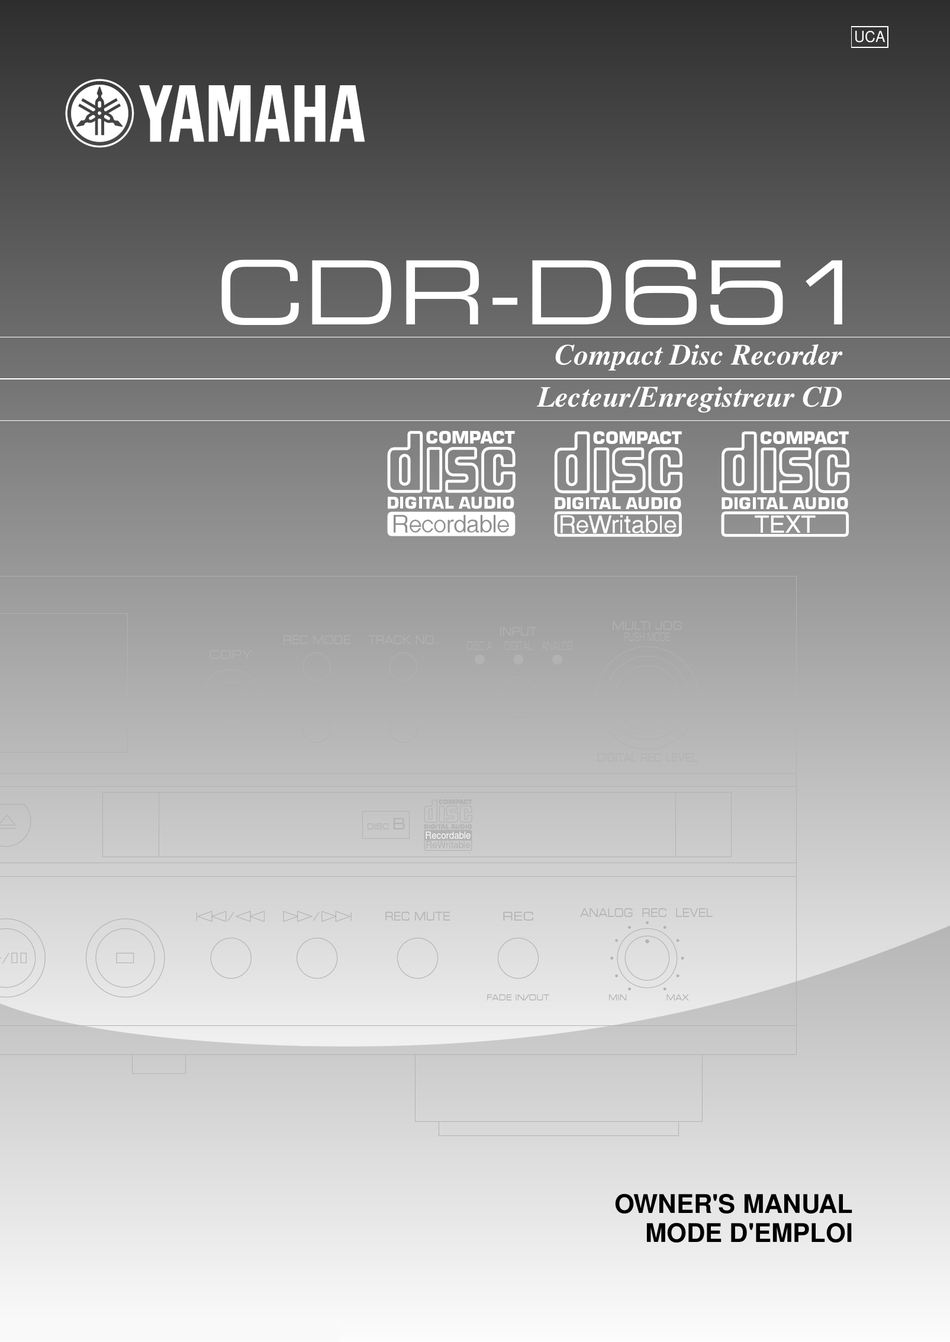 YAMAHA CDR-D651 OWNER'S MANUAL Pdf Download | ManualsLib